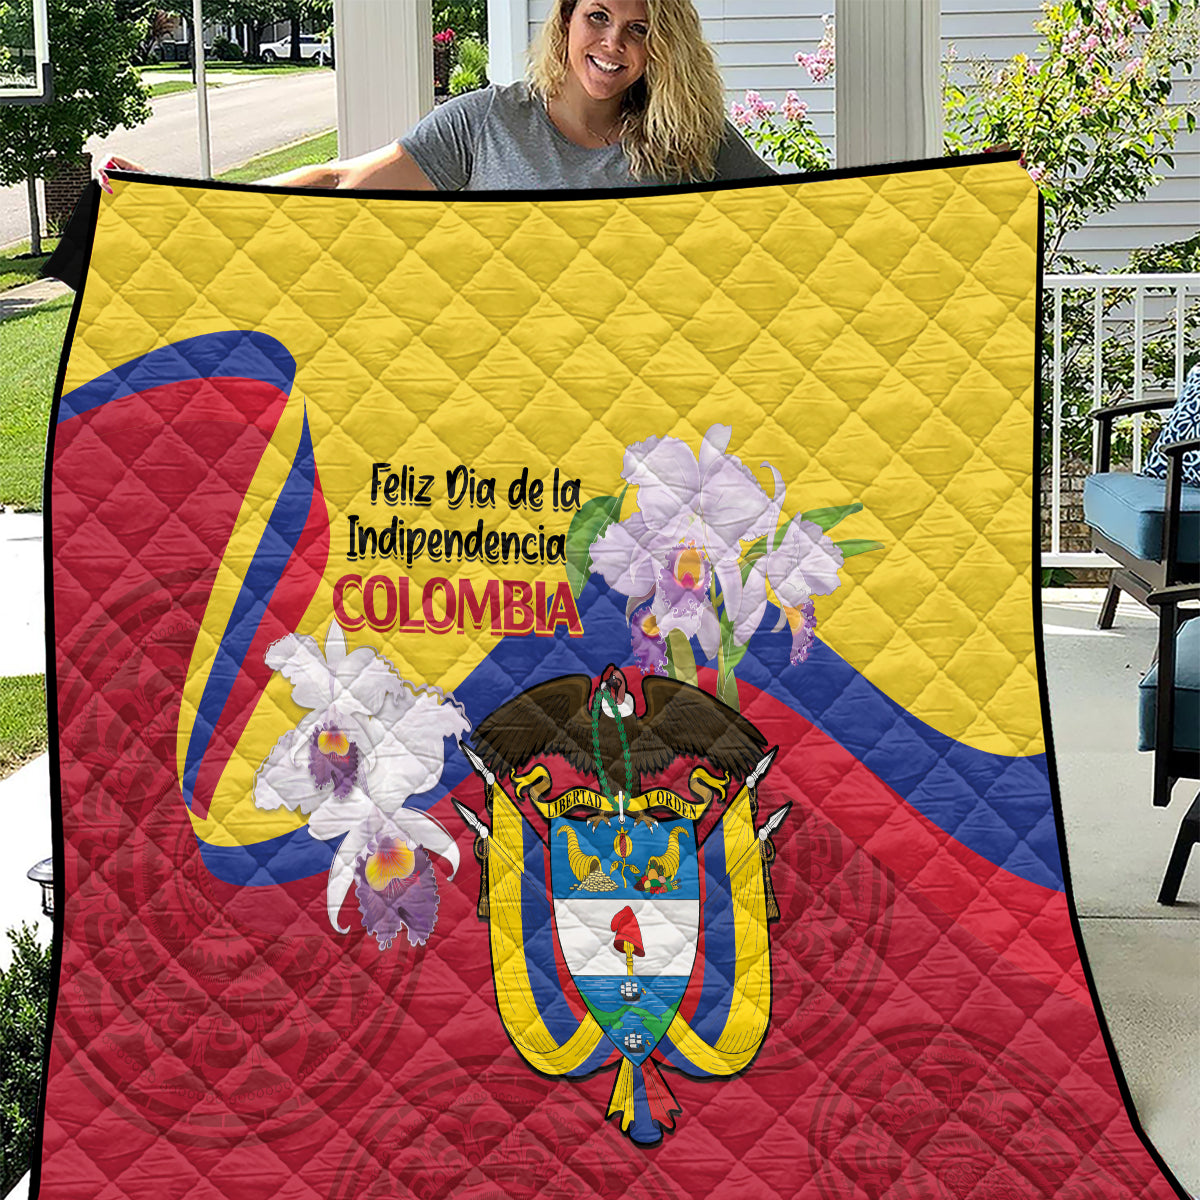 Colombia Independence Day Quilt Feliz Dia de la Independencia